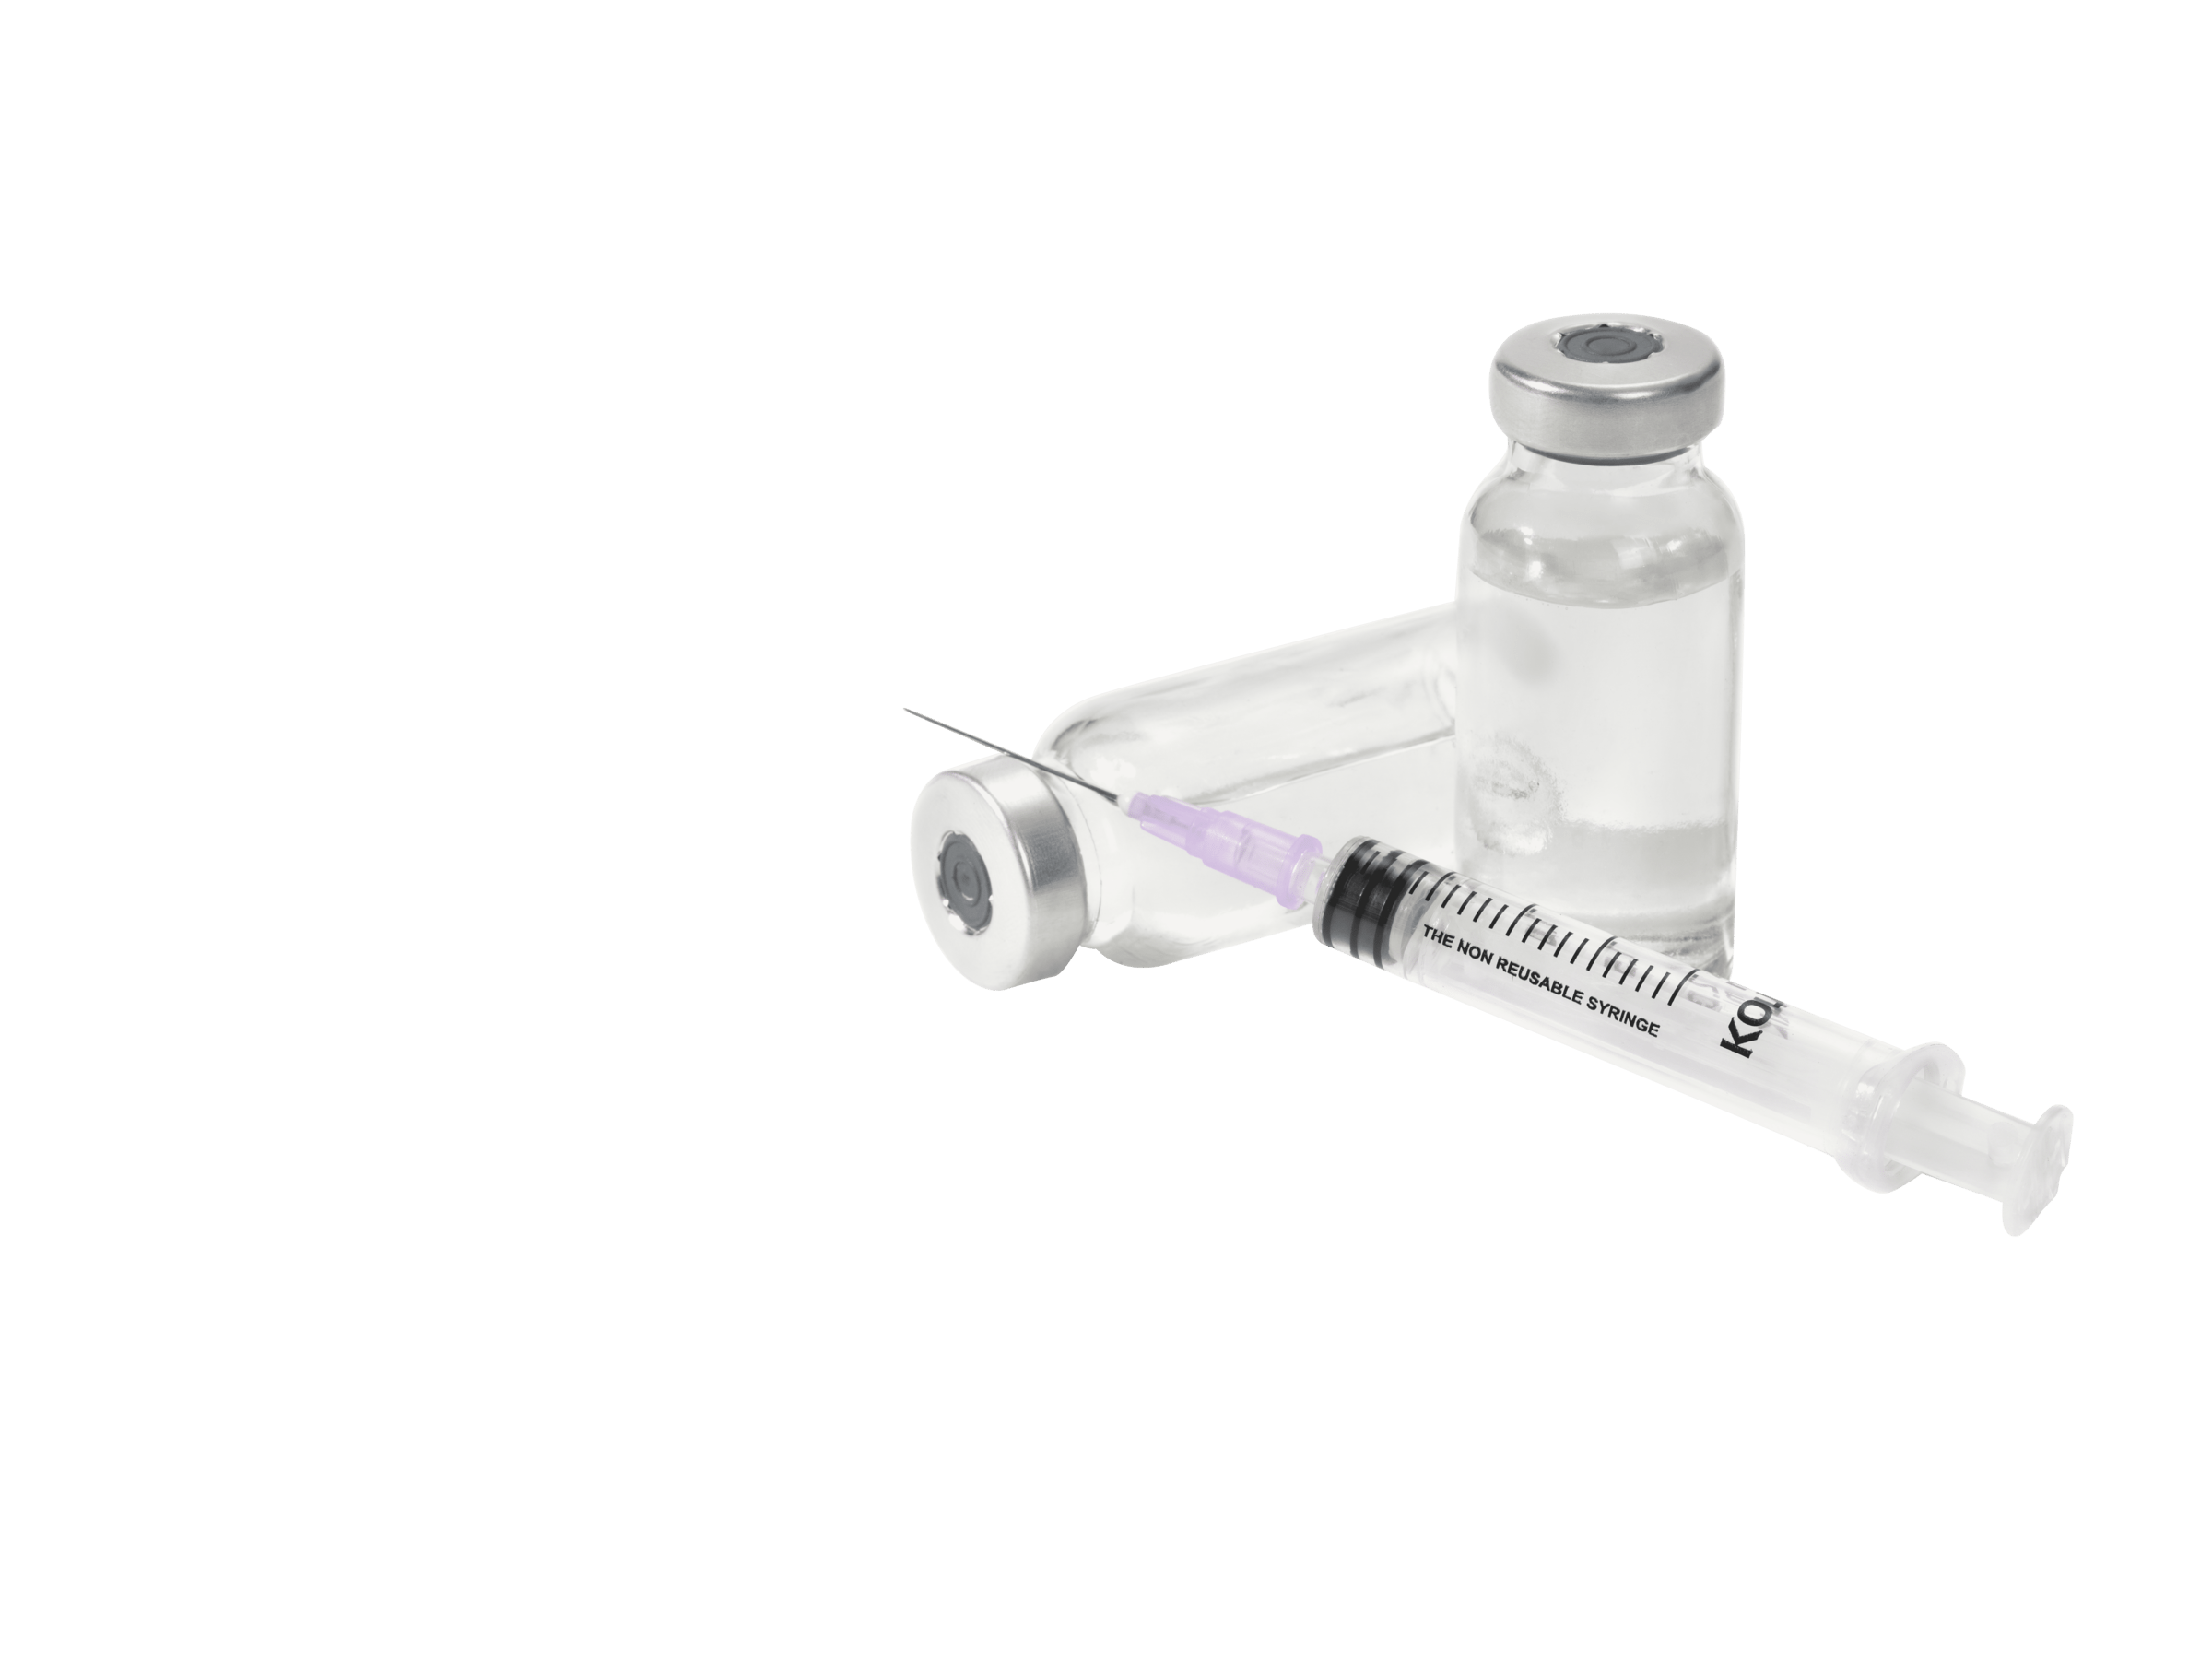 Safe and Sterile Kojak Selinge Auto-Disable Syringes for Medical pic